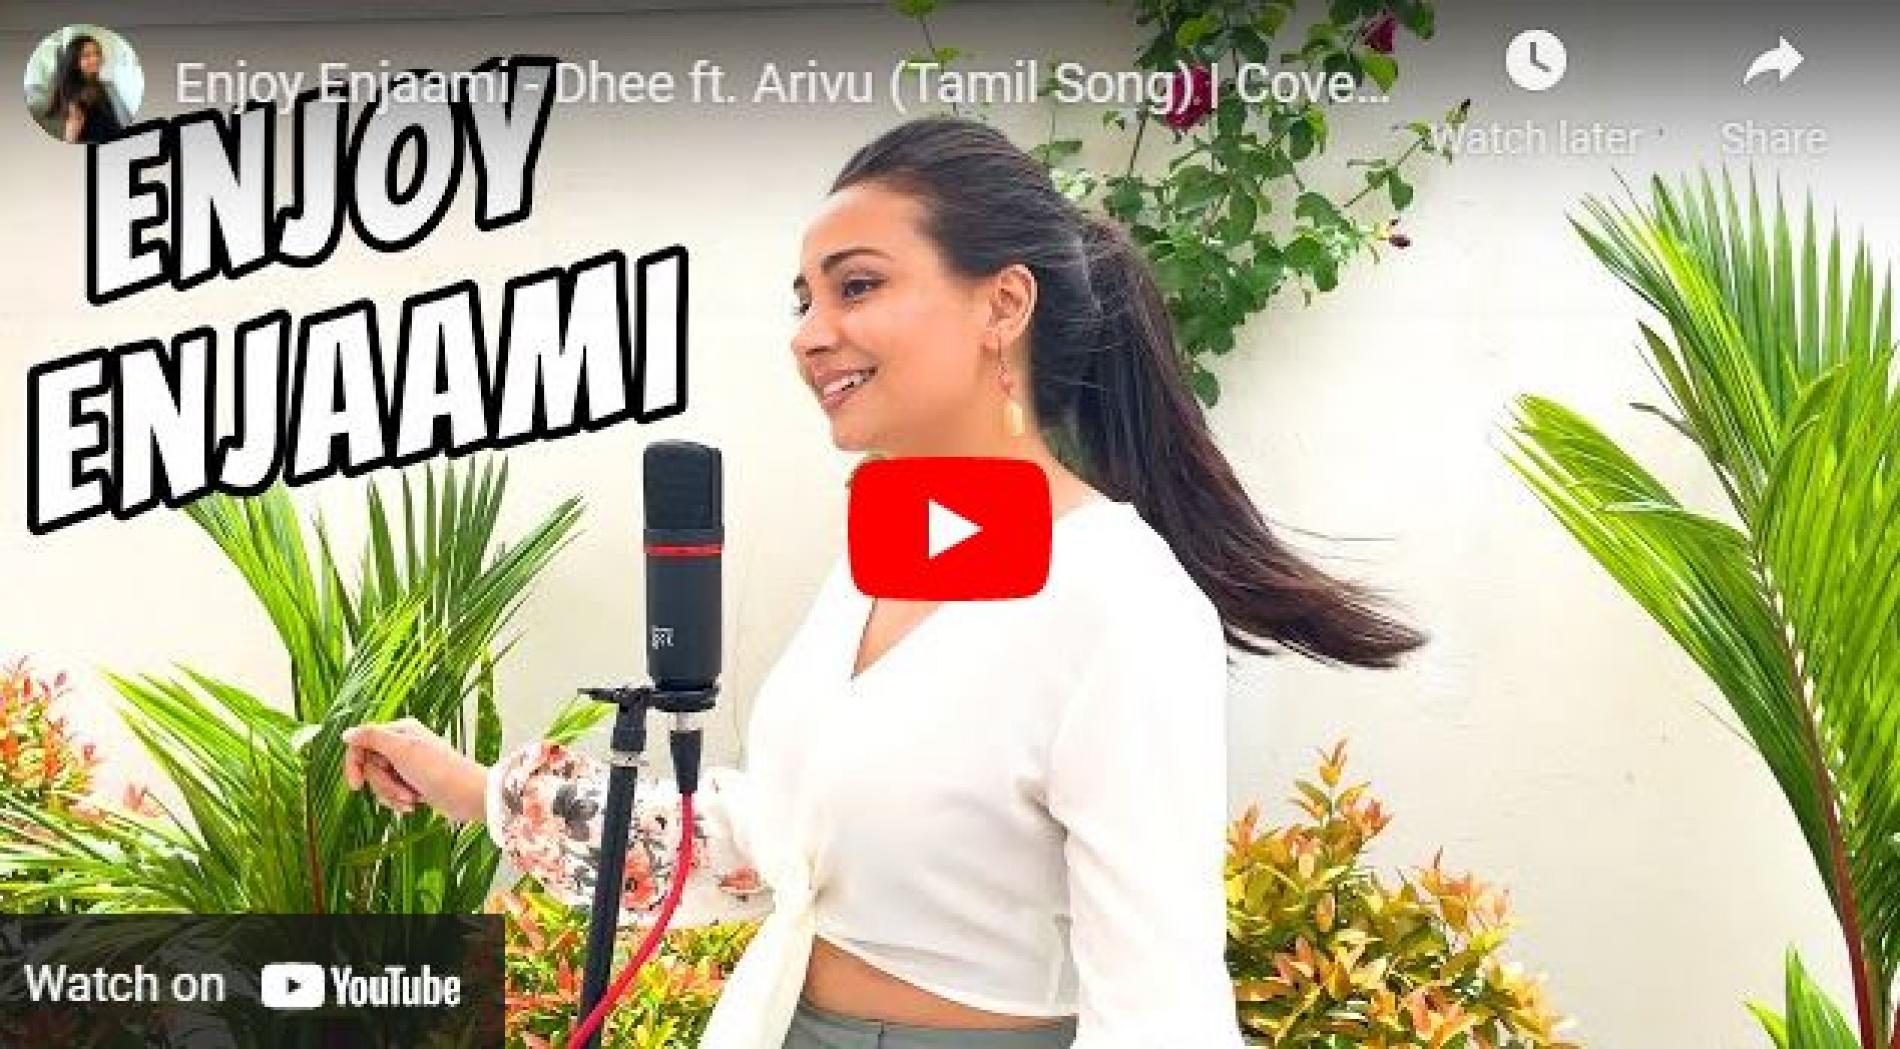 New Music : Enjoy Enjaami – Dhee ft Arivu (Tamil Song) | Cover by Stephanie Sansoni